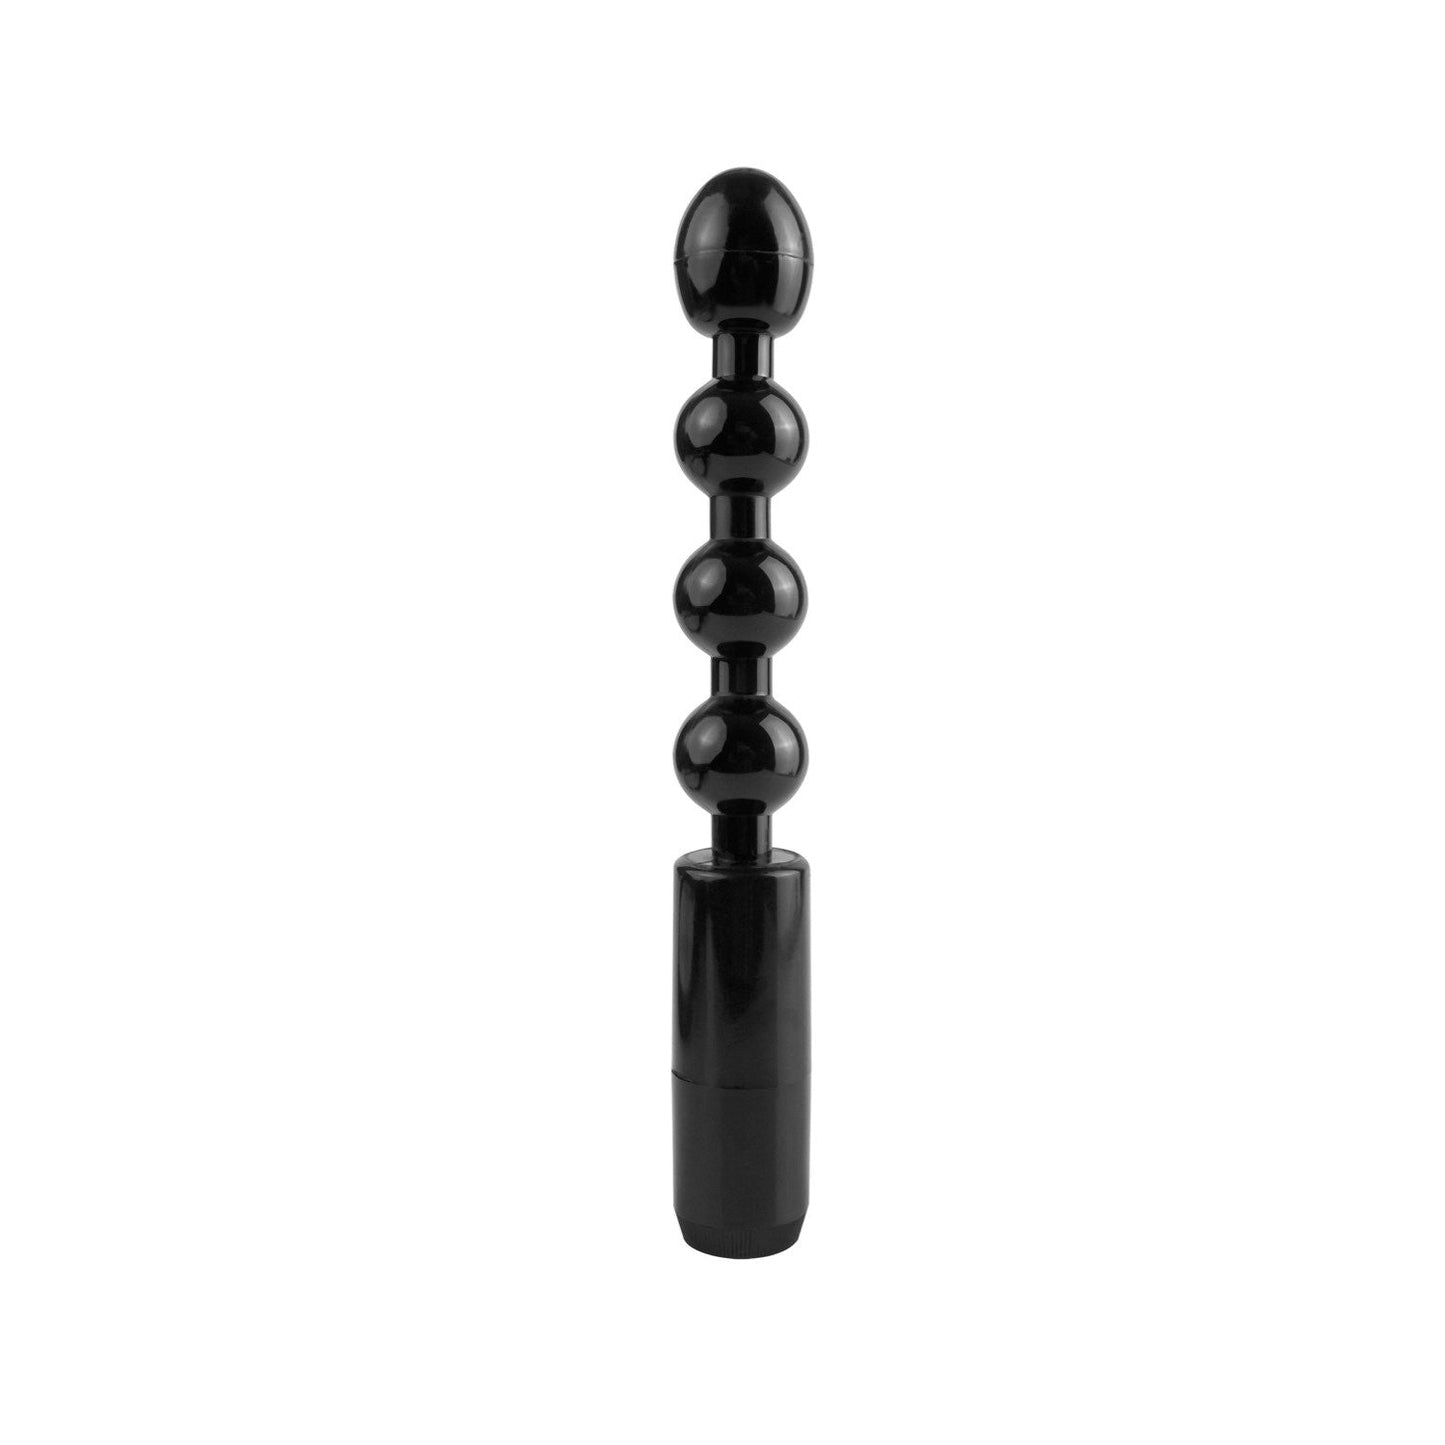 Power Beads - Black 12 cm (4.75") Vibrating Anal Cord